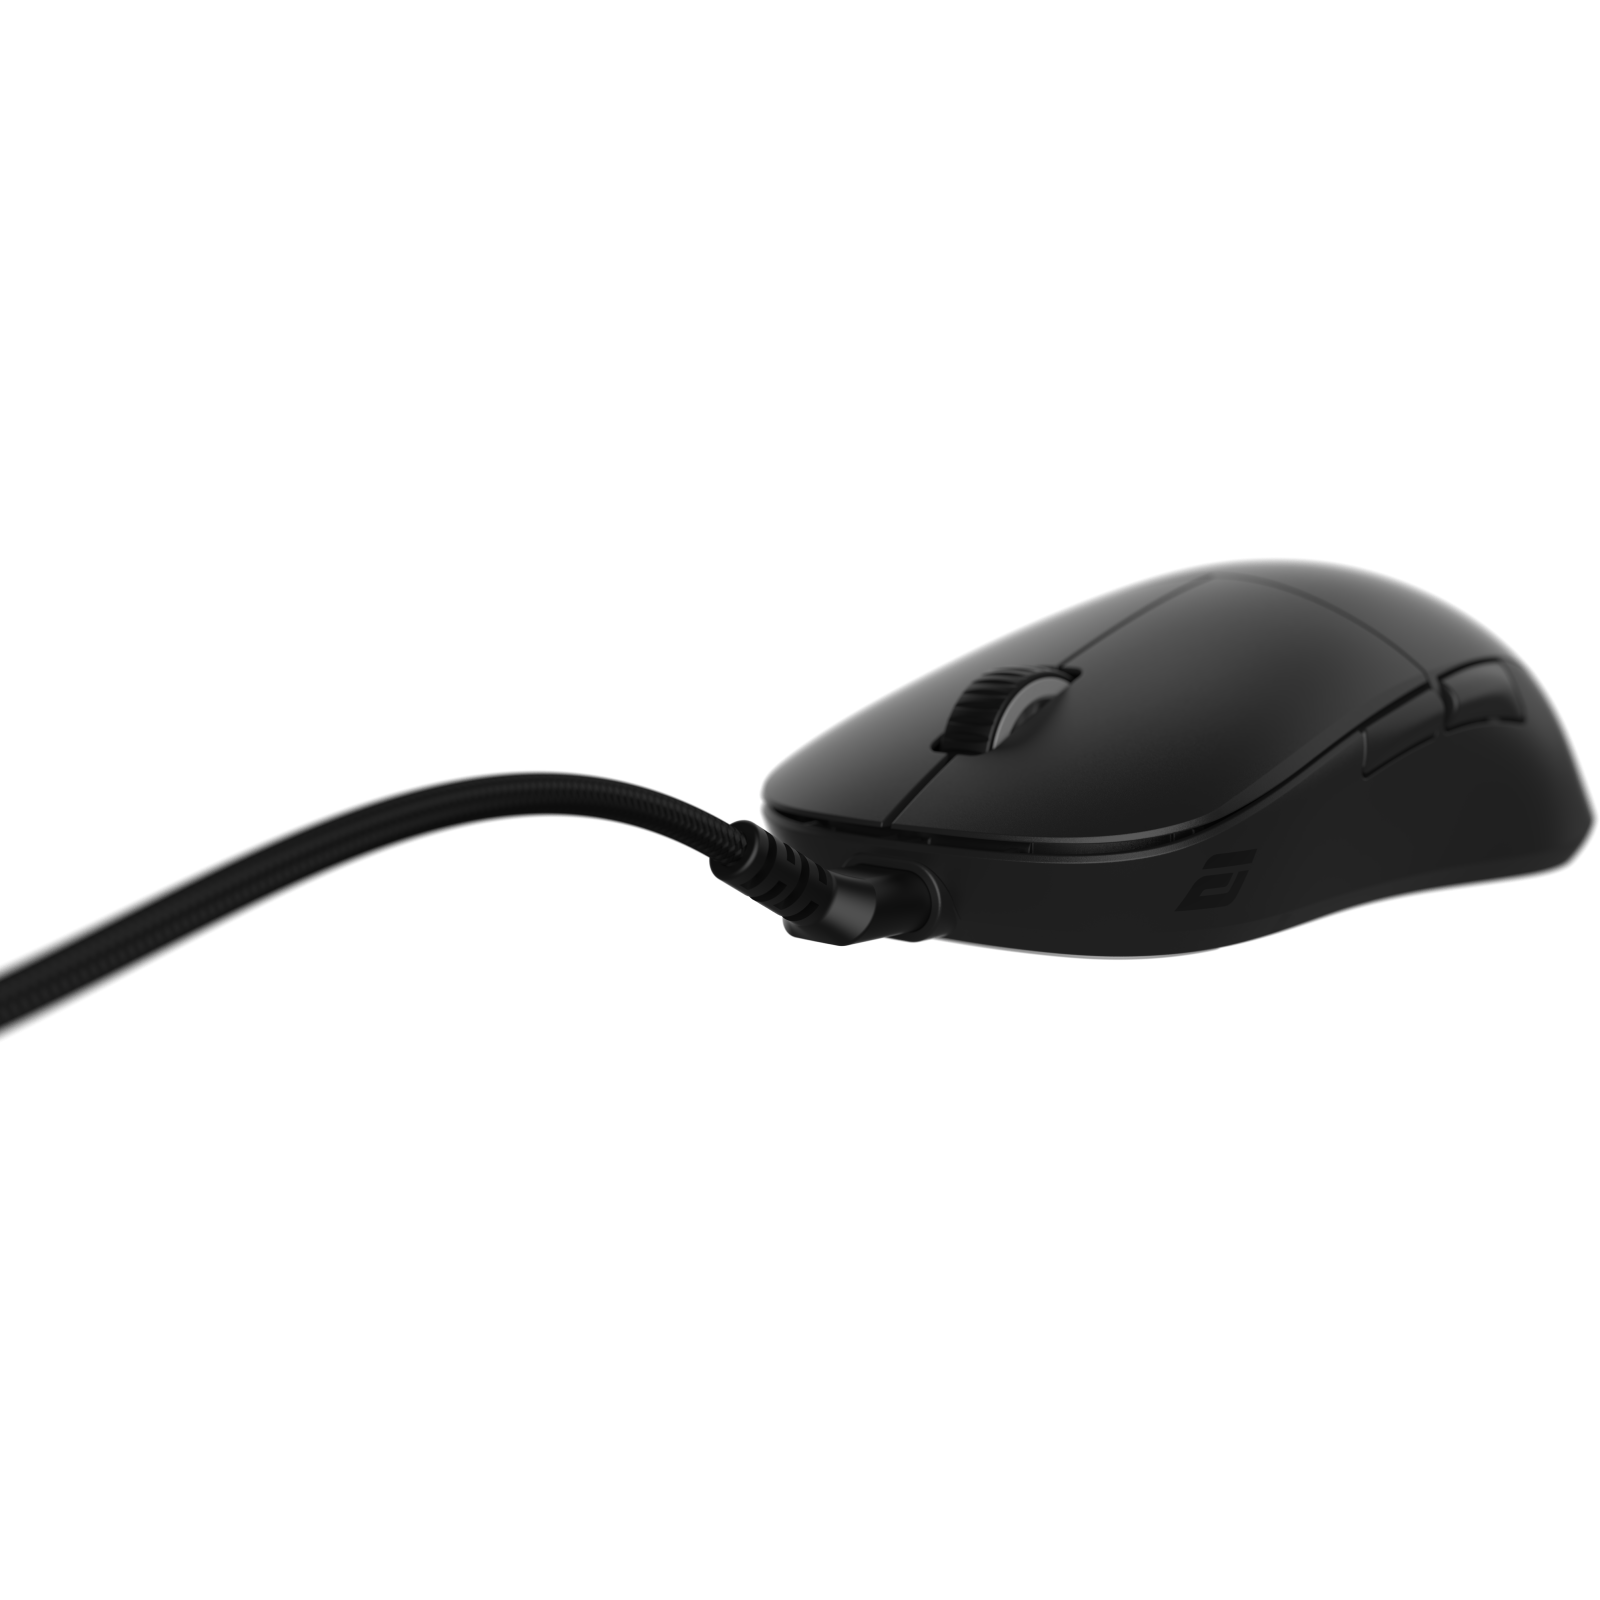 Endgame Gear XM2we Gaming Mouse Black